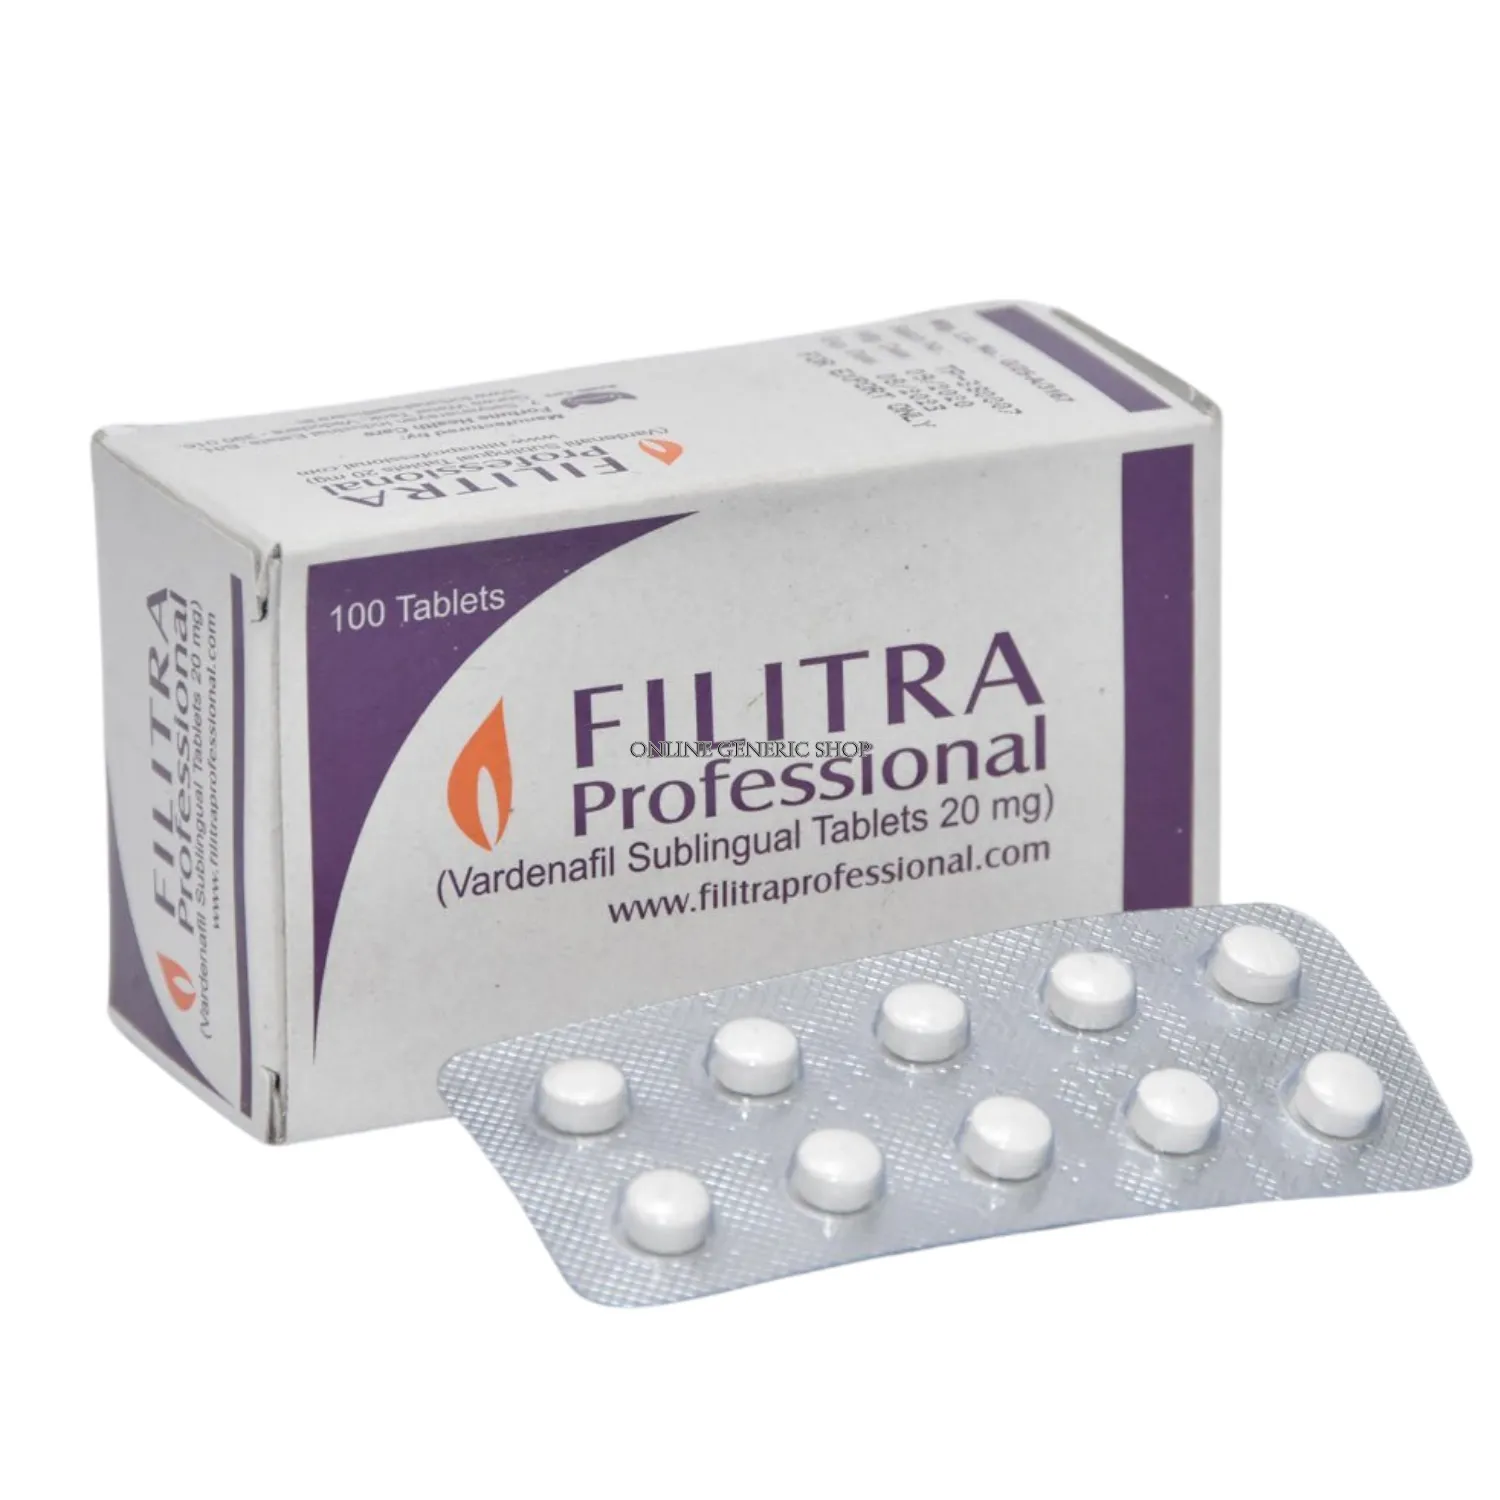 Filitra Professional 20 Mg image